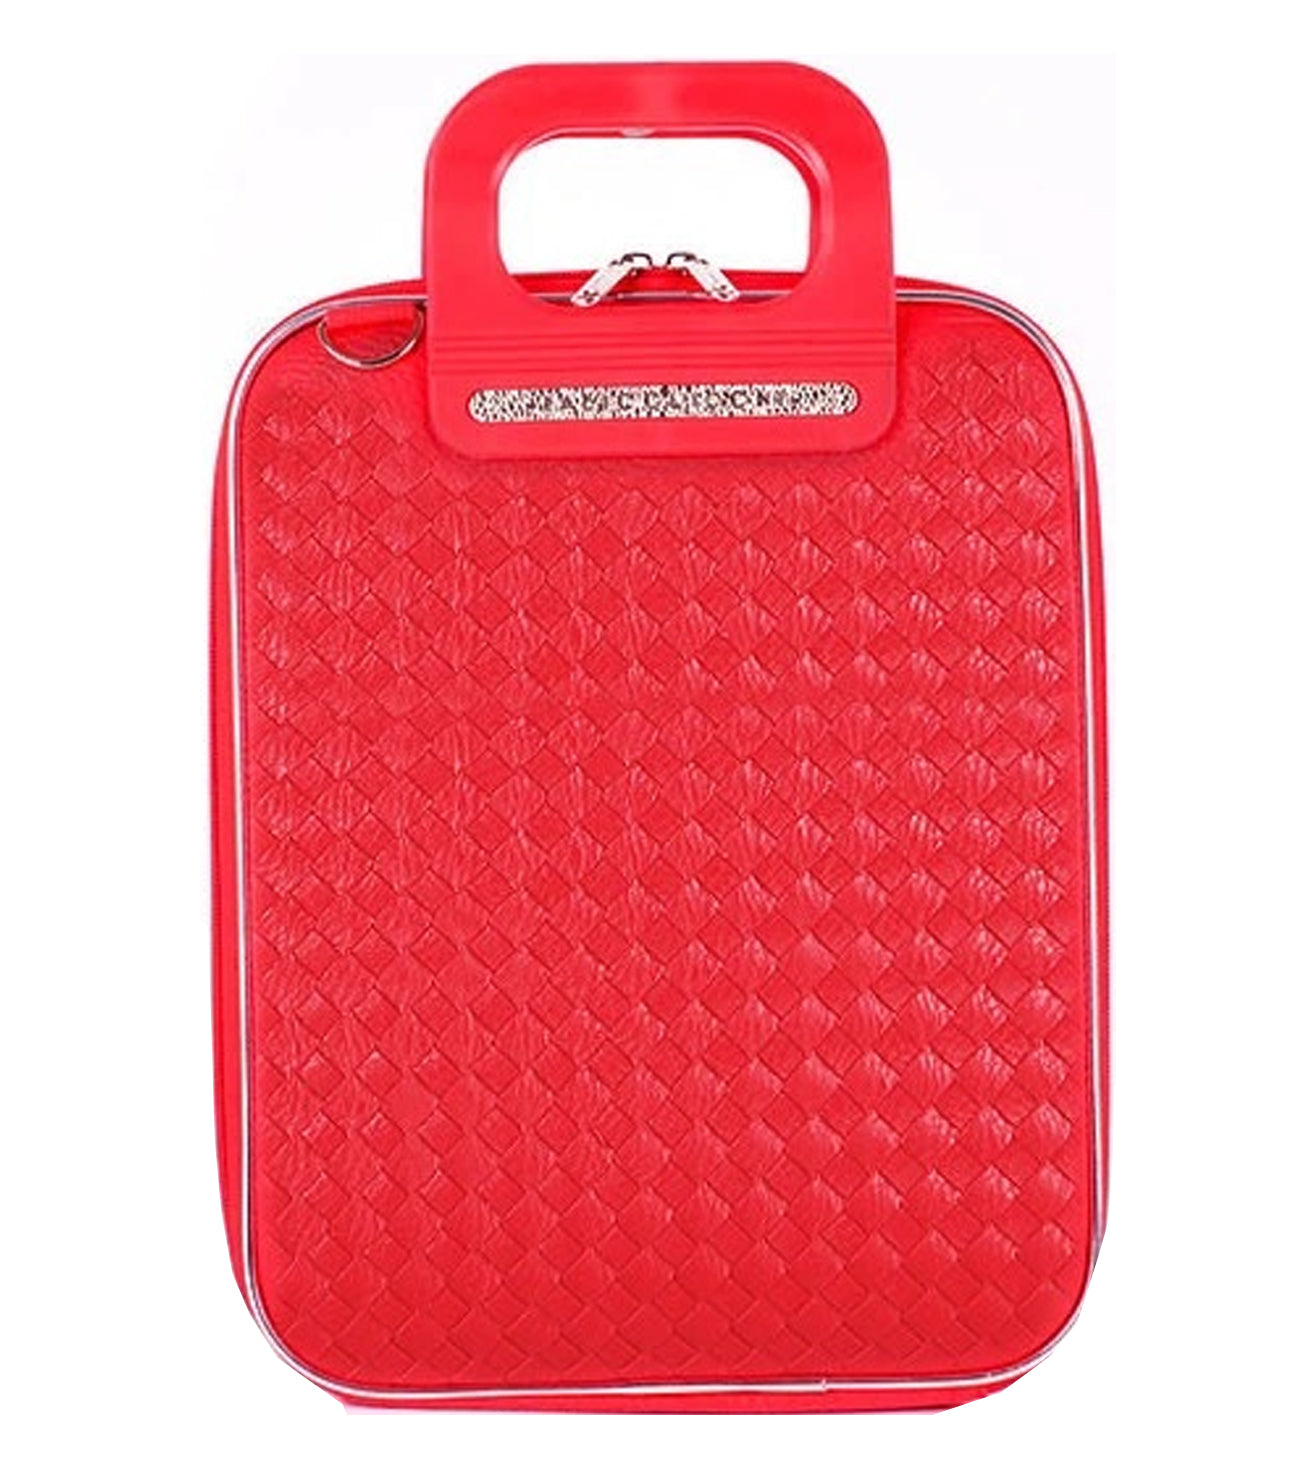 Bombata Murano Weaved Unisex Red Laptop Briefcase